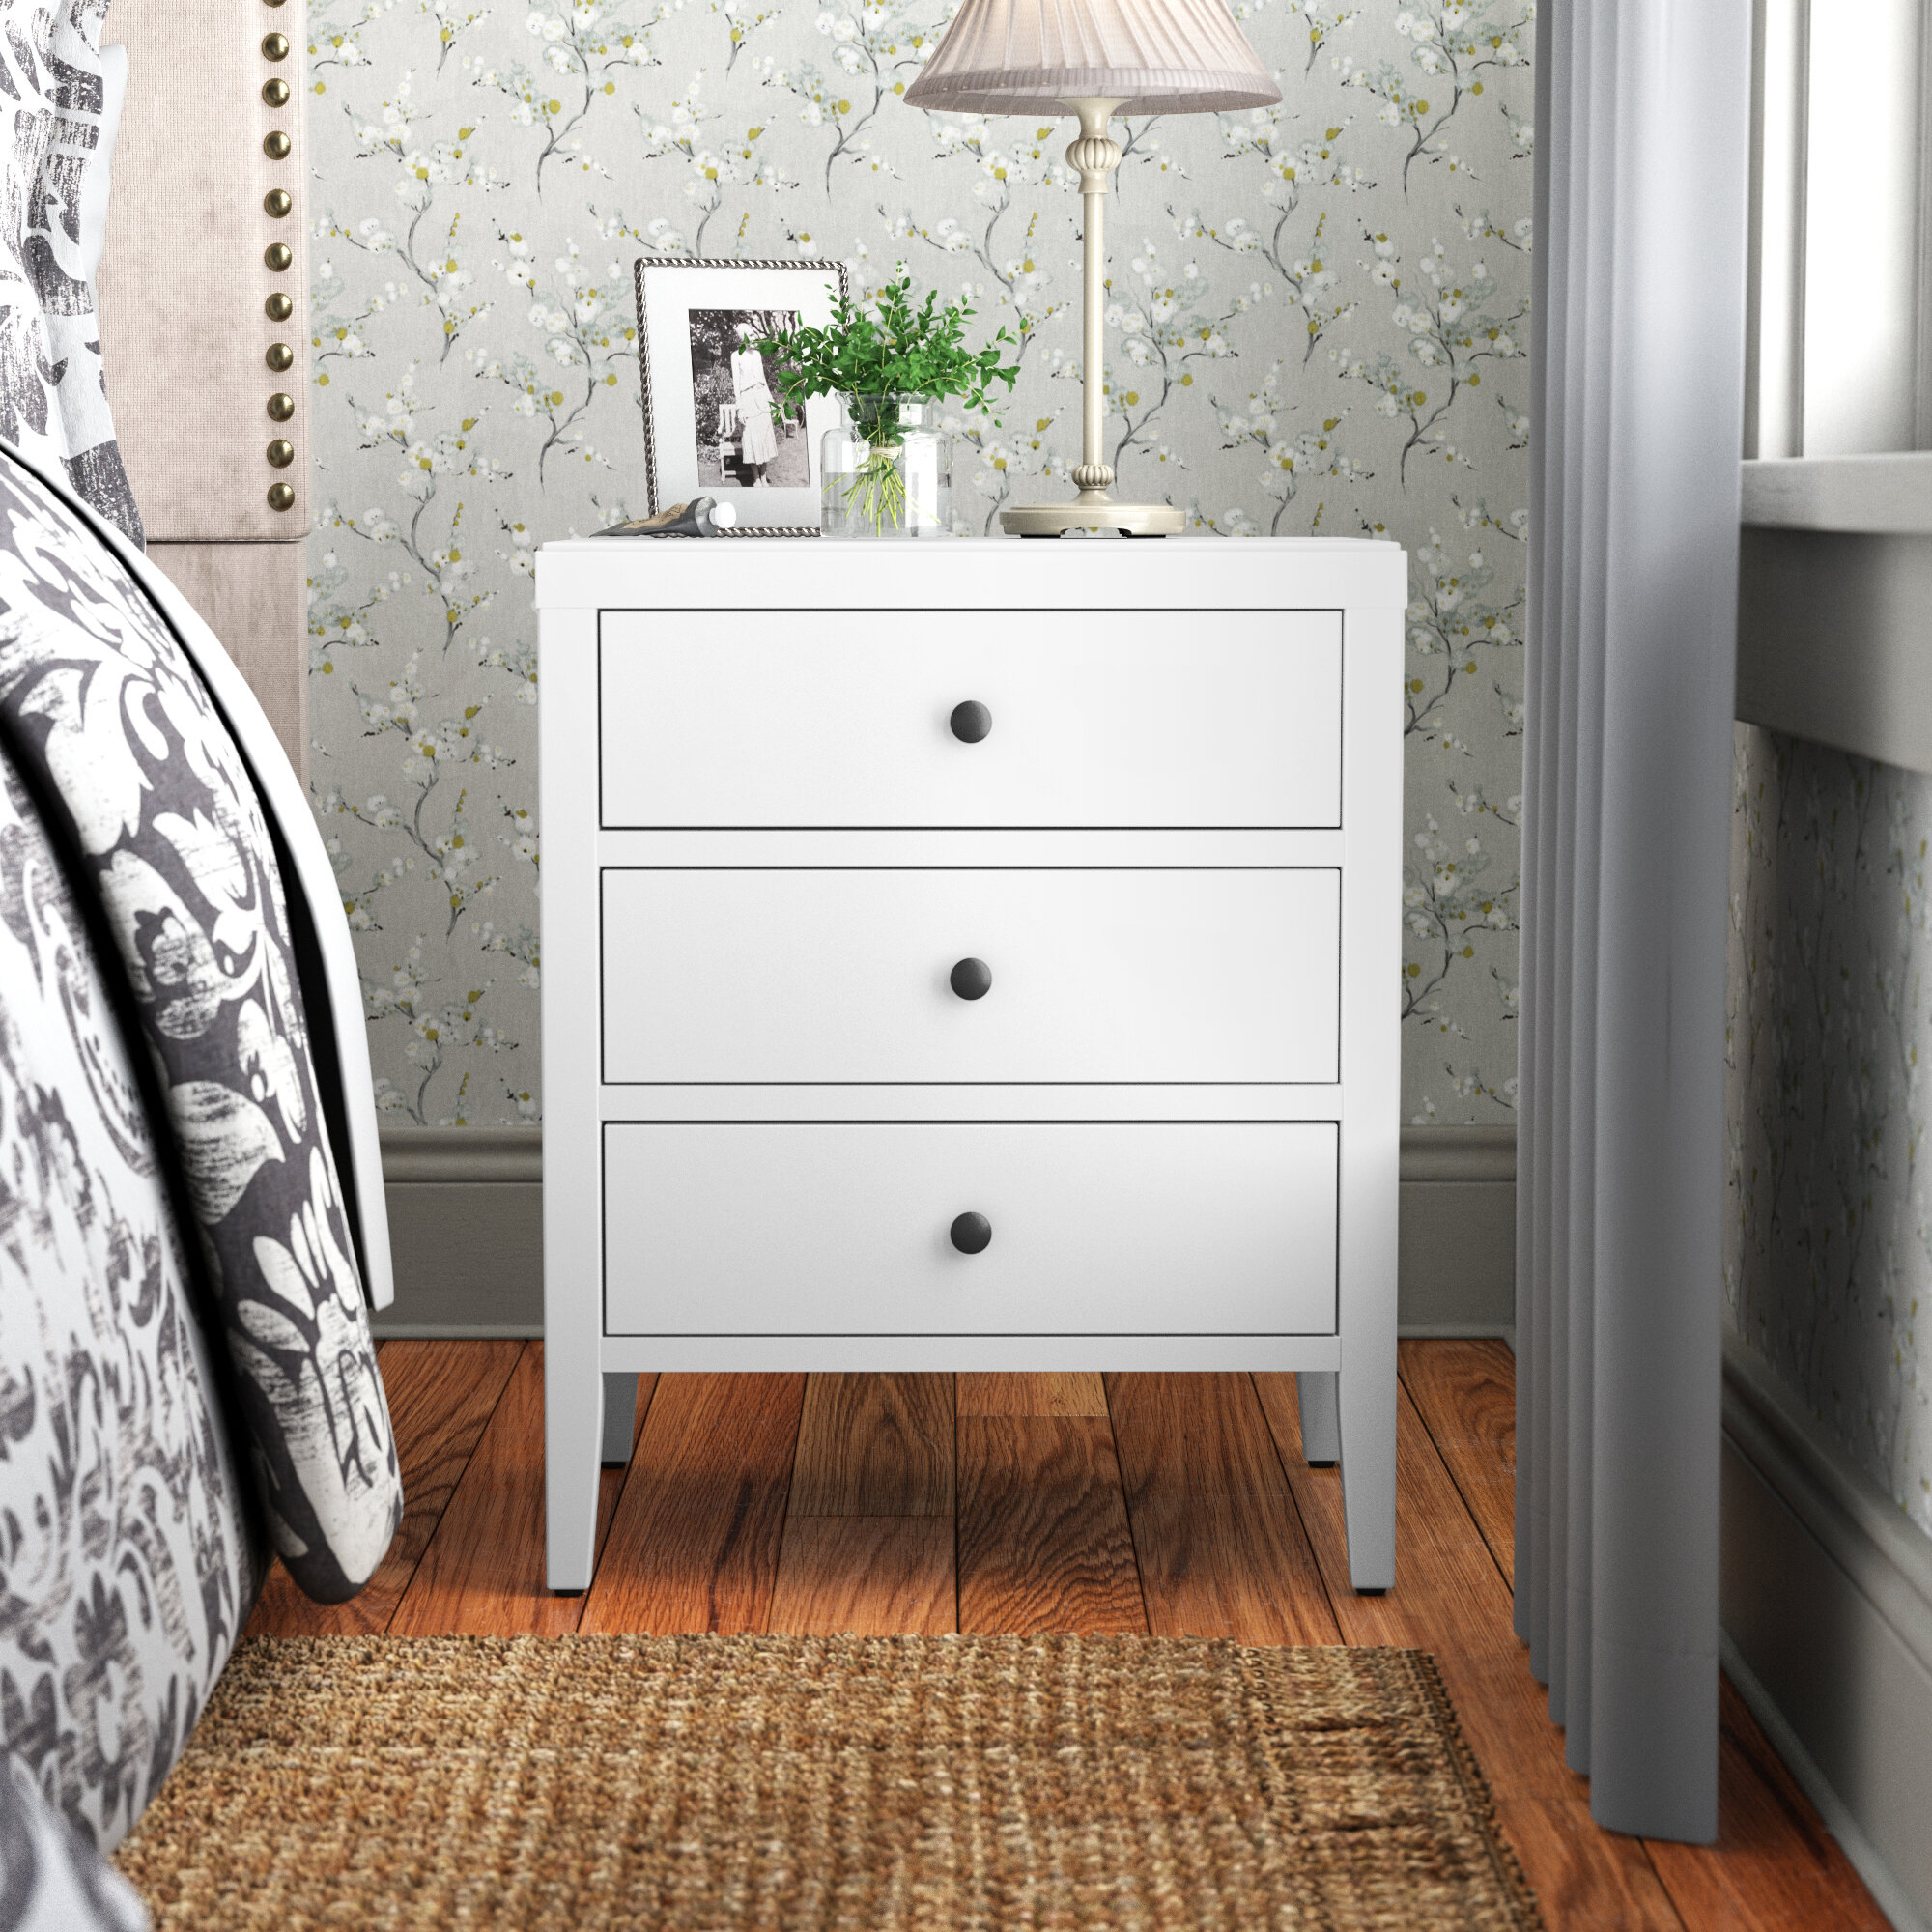 2x Bedside Table Rack Bedroom Nightstand Cabinet Drawer Home Organizer Shelf 